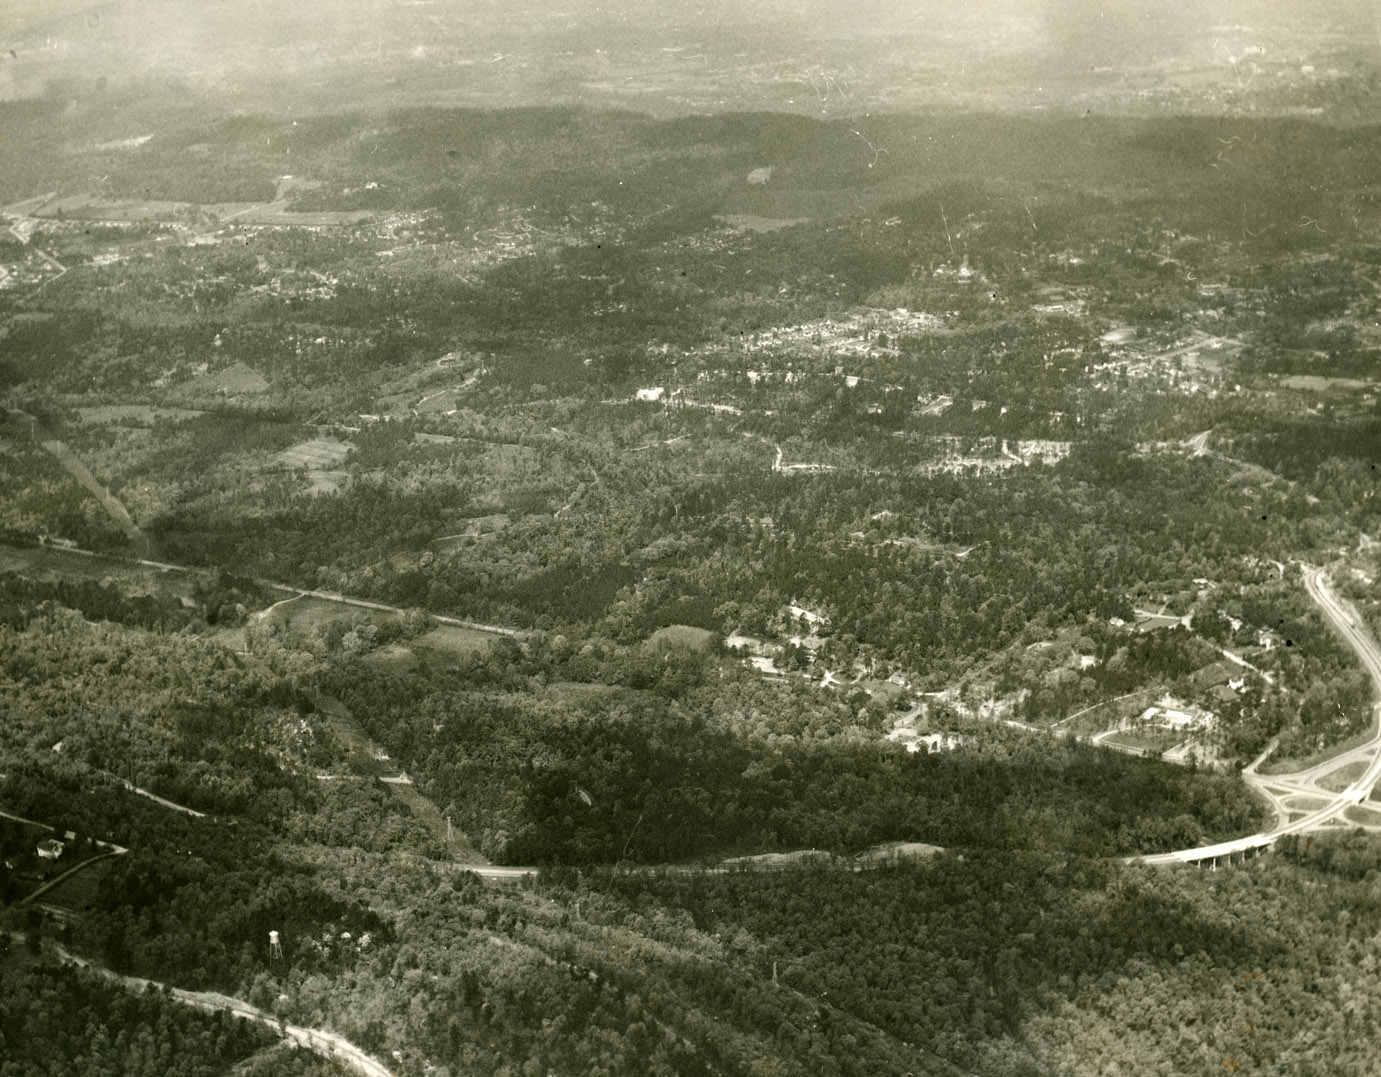 pre-development photo of land